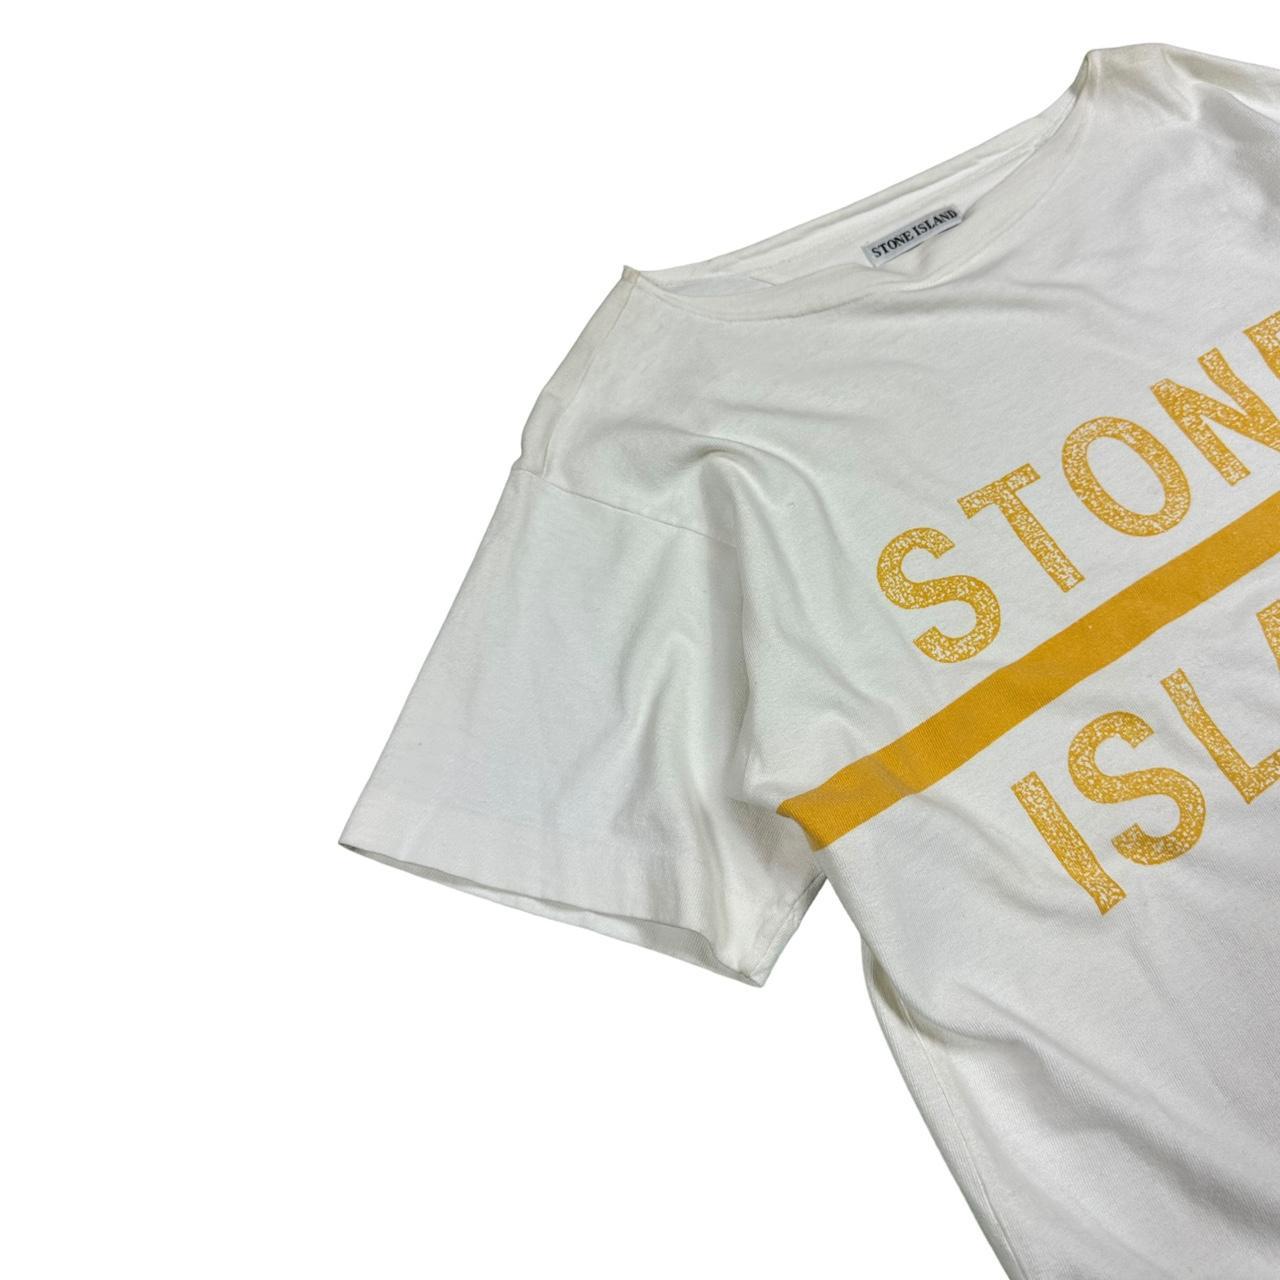 S/S 1992 Stone Island White Sailors T-shirt